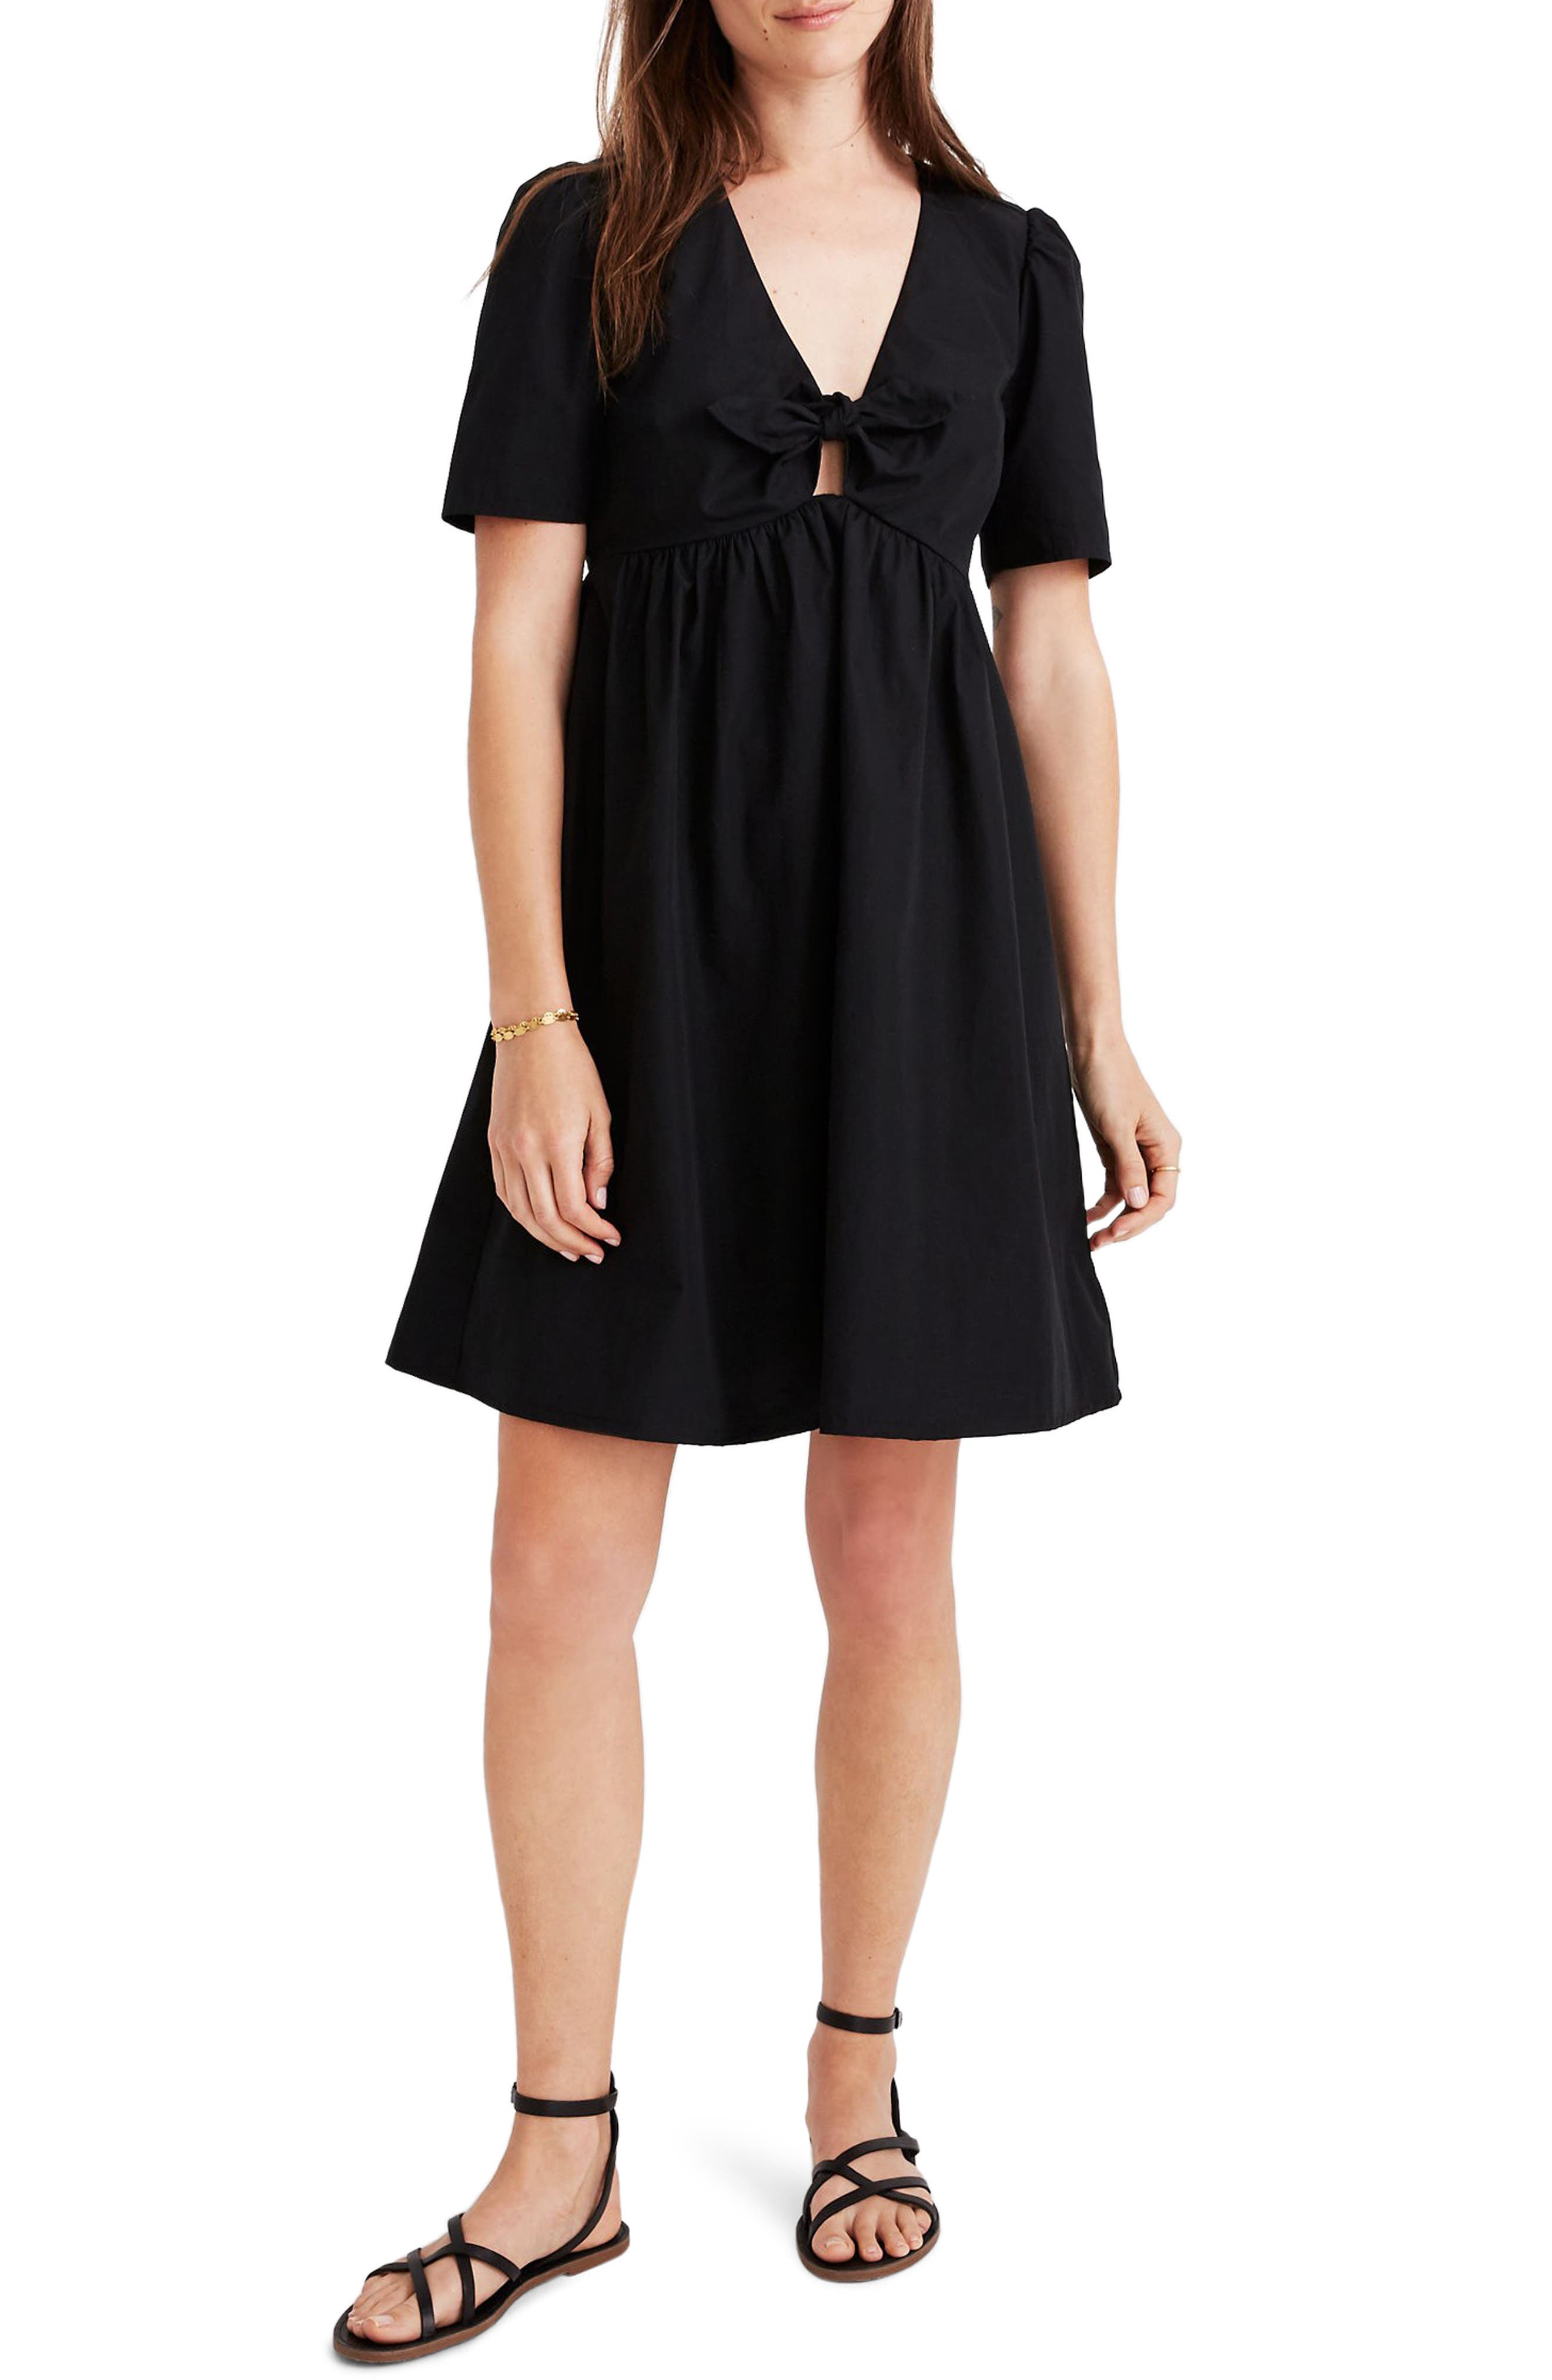 Madewell Black Dress Online Deals, UP TO 66% OFF | www.ldeventos.com